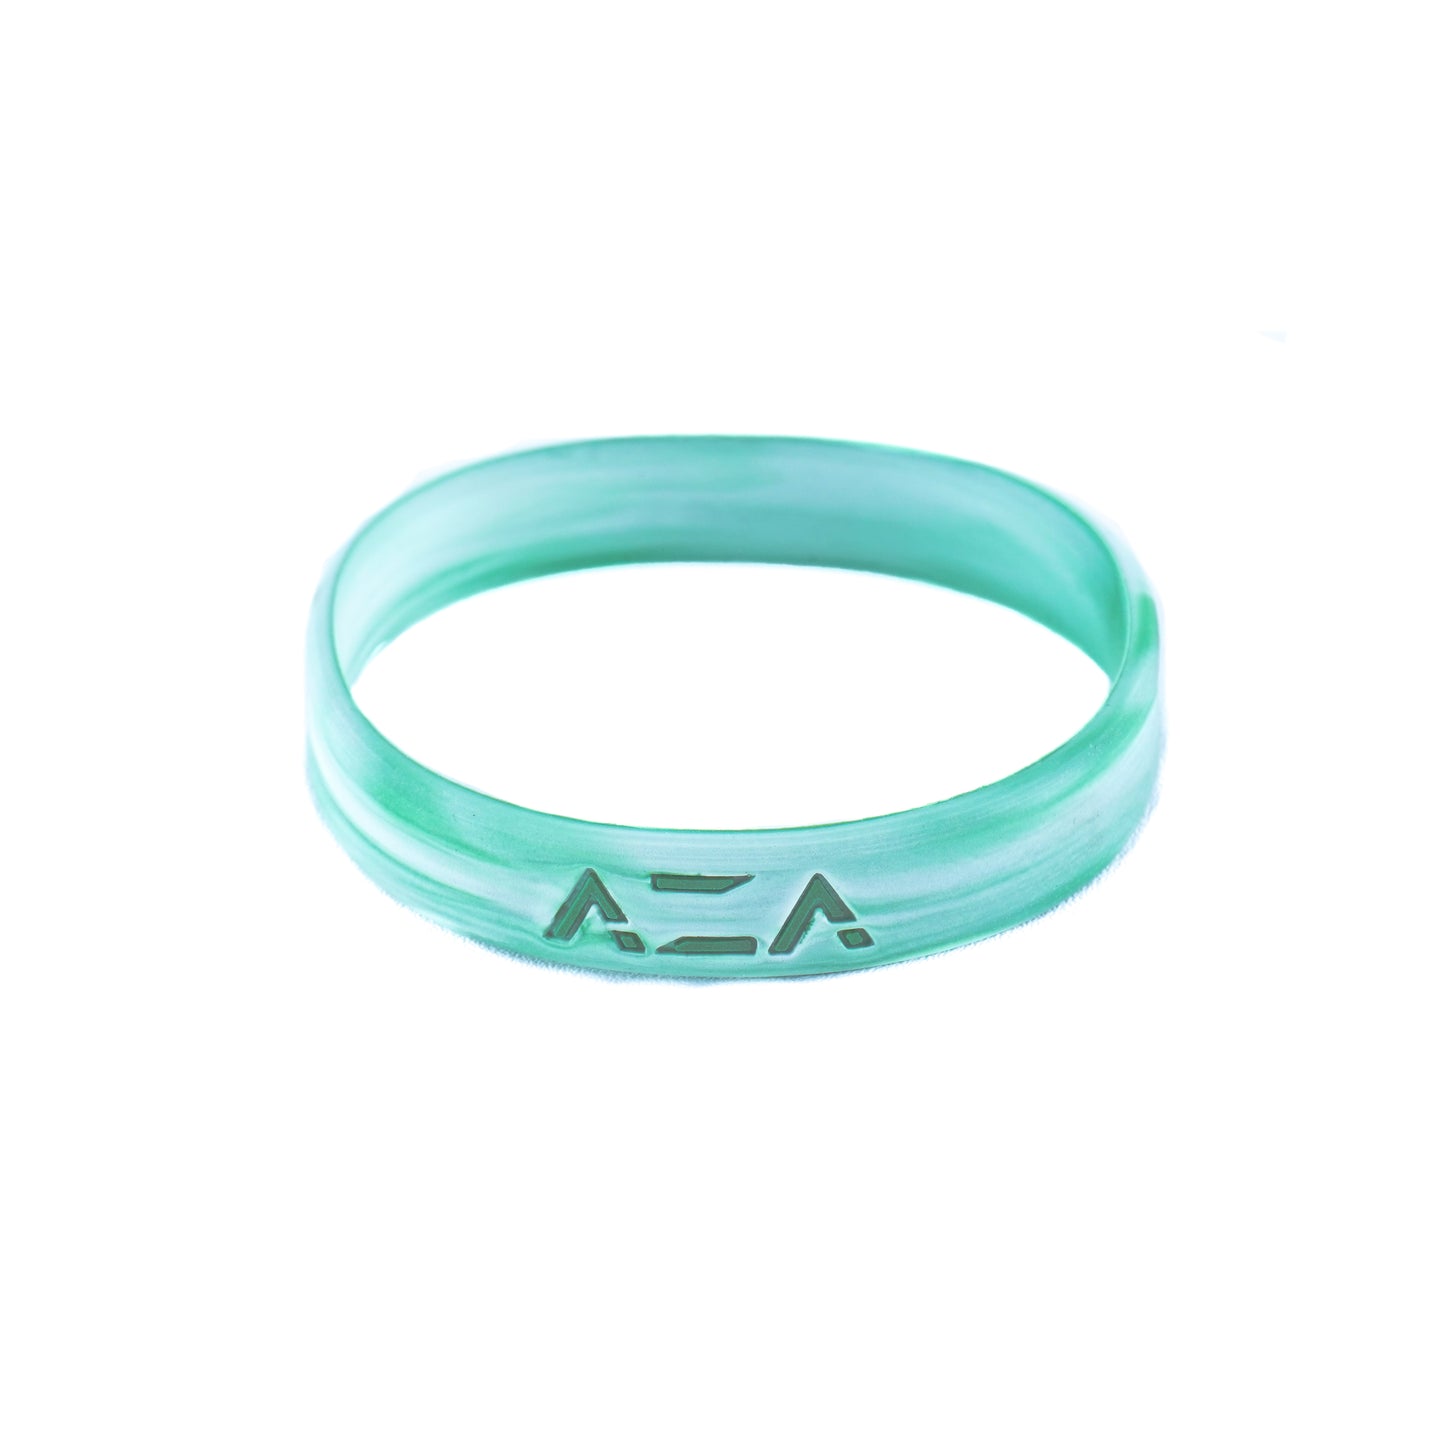 AZA Baller ID Marble Edition - Green